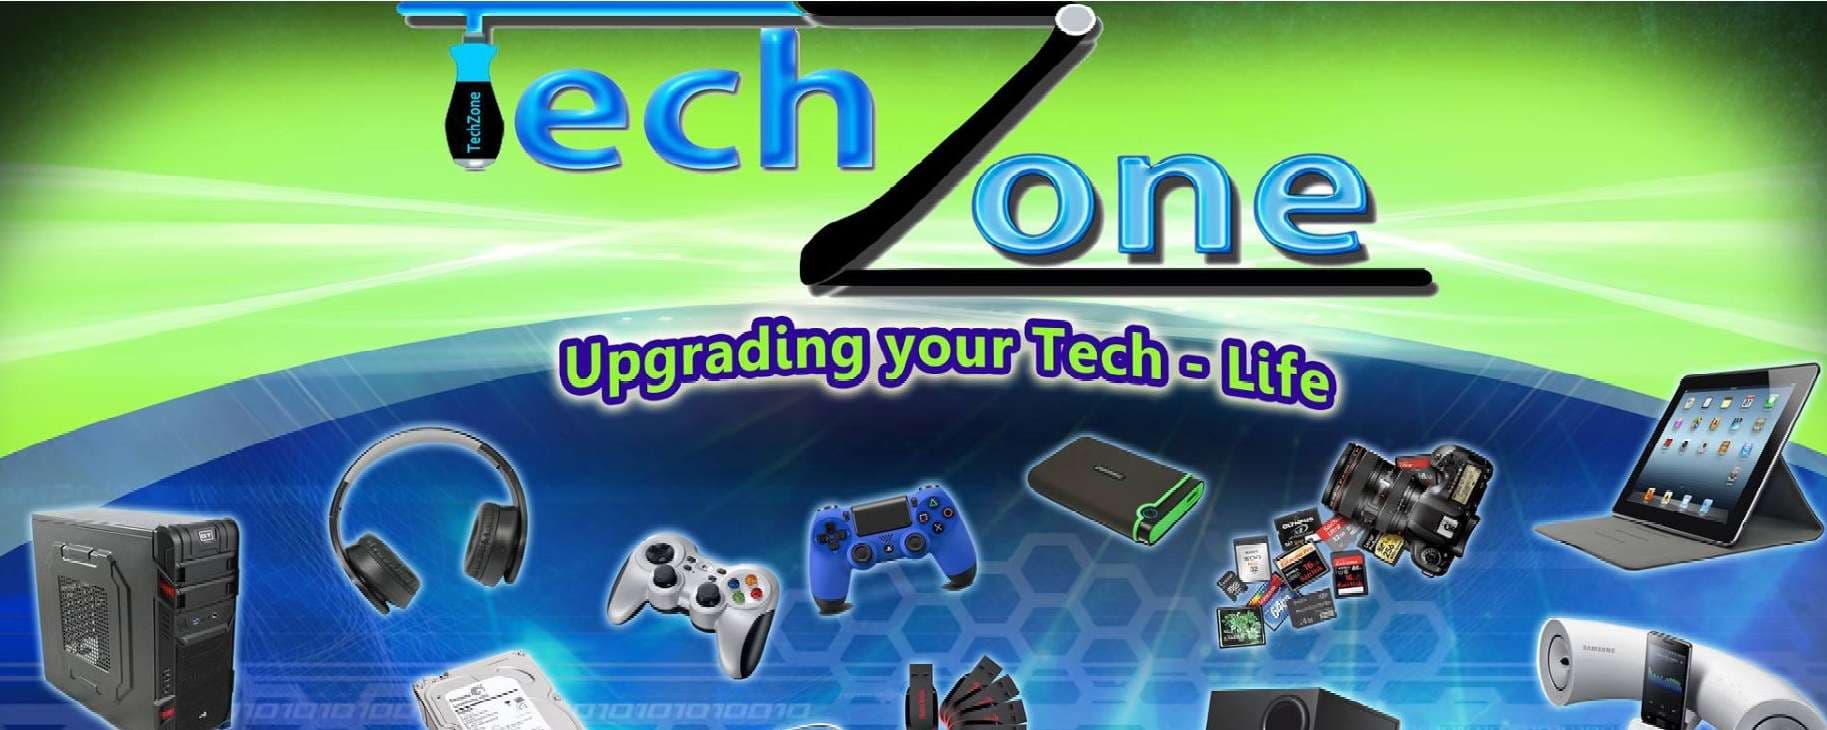 Techzone Seychelles